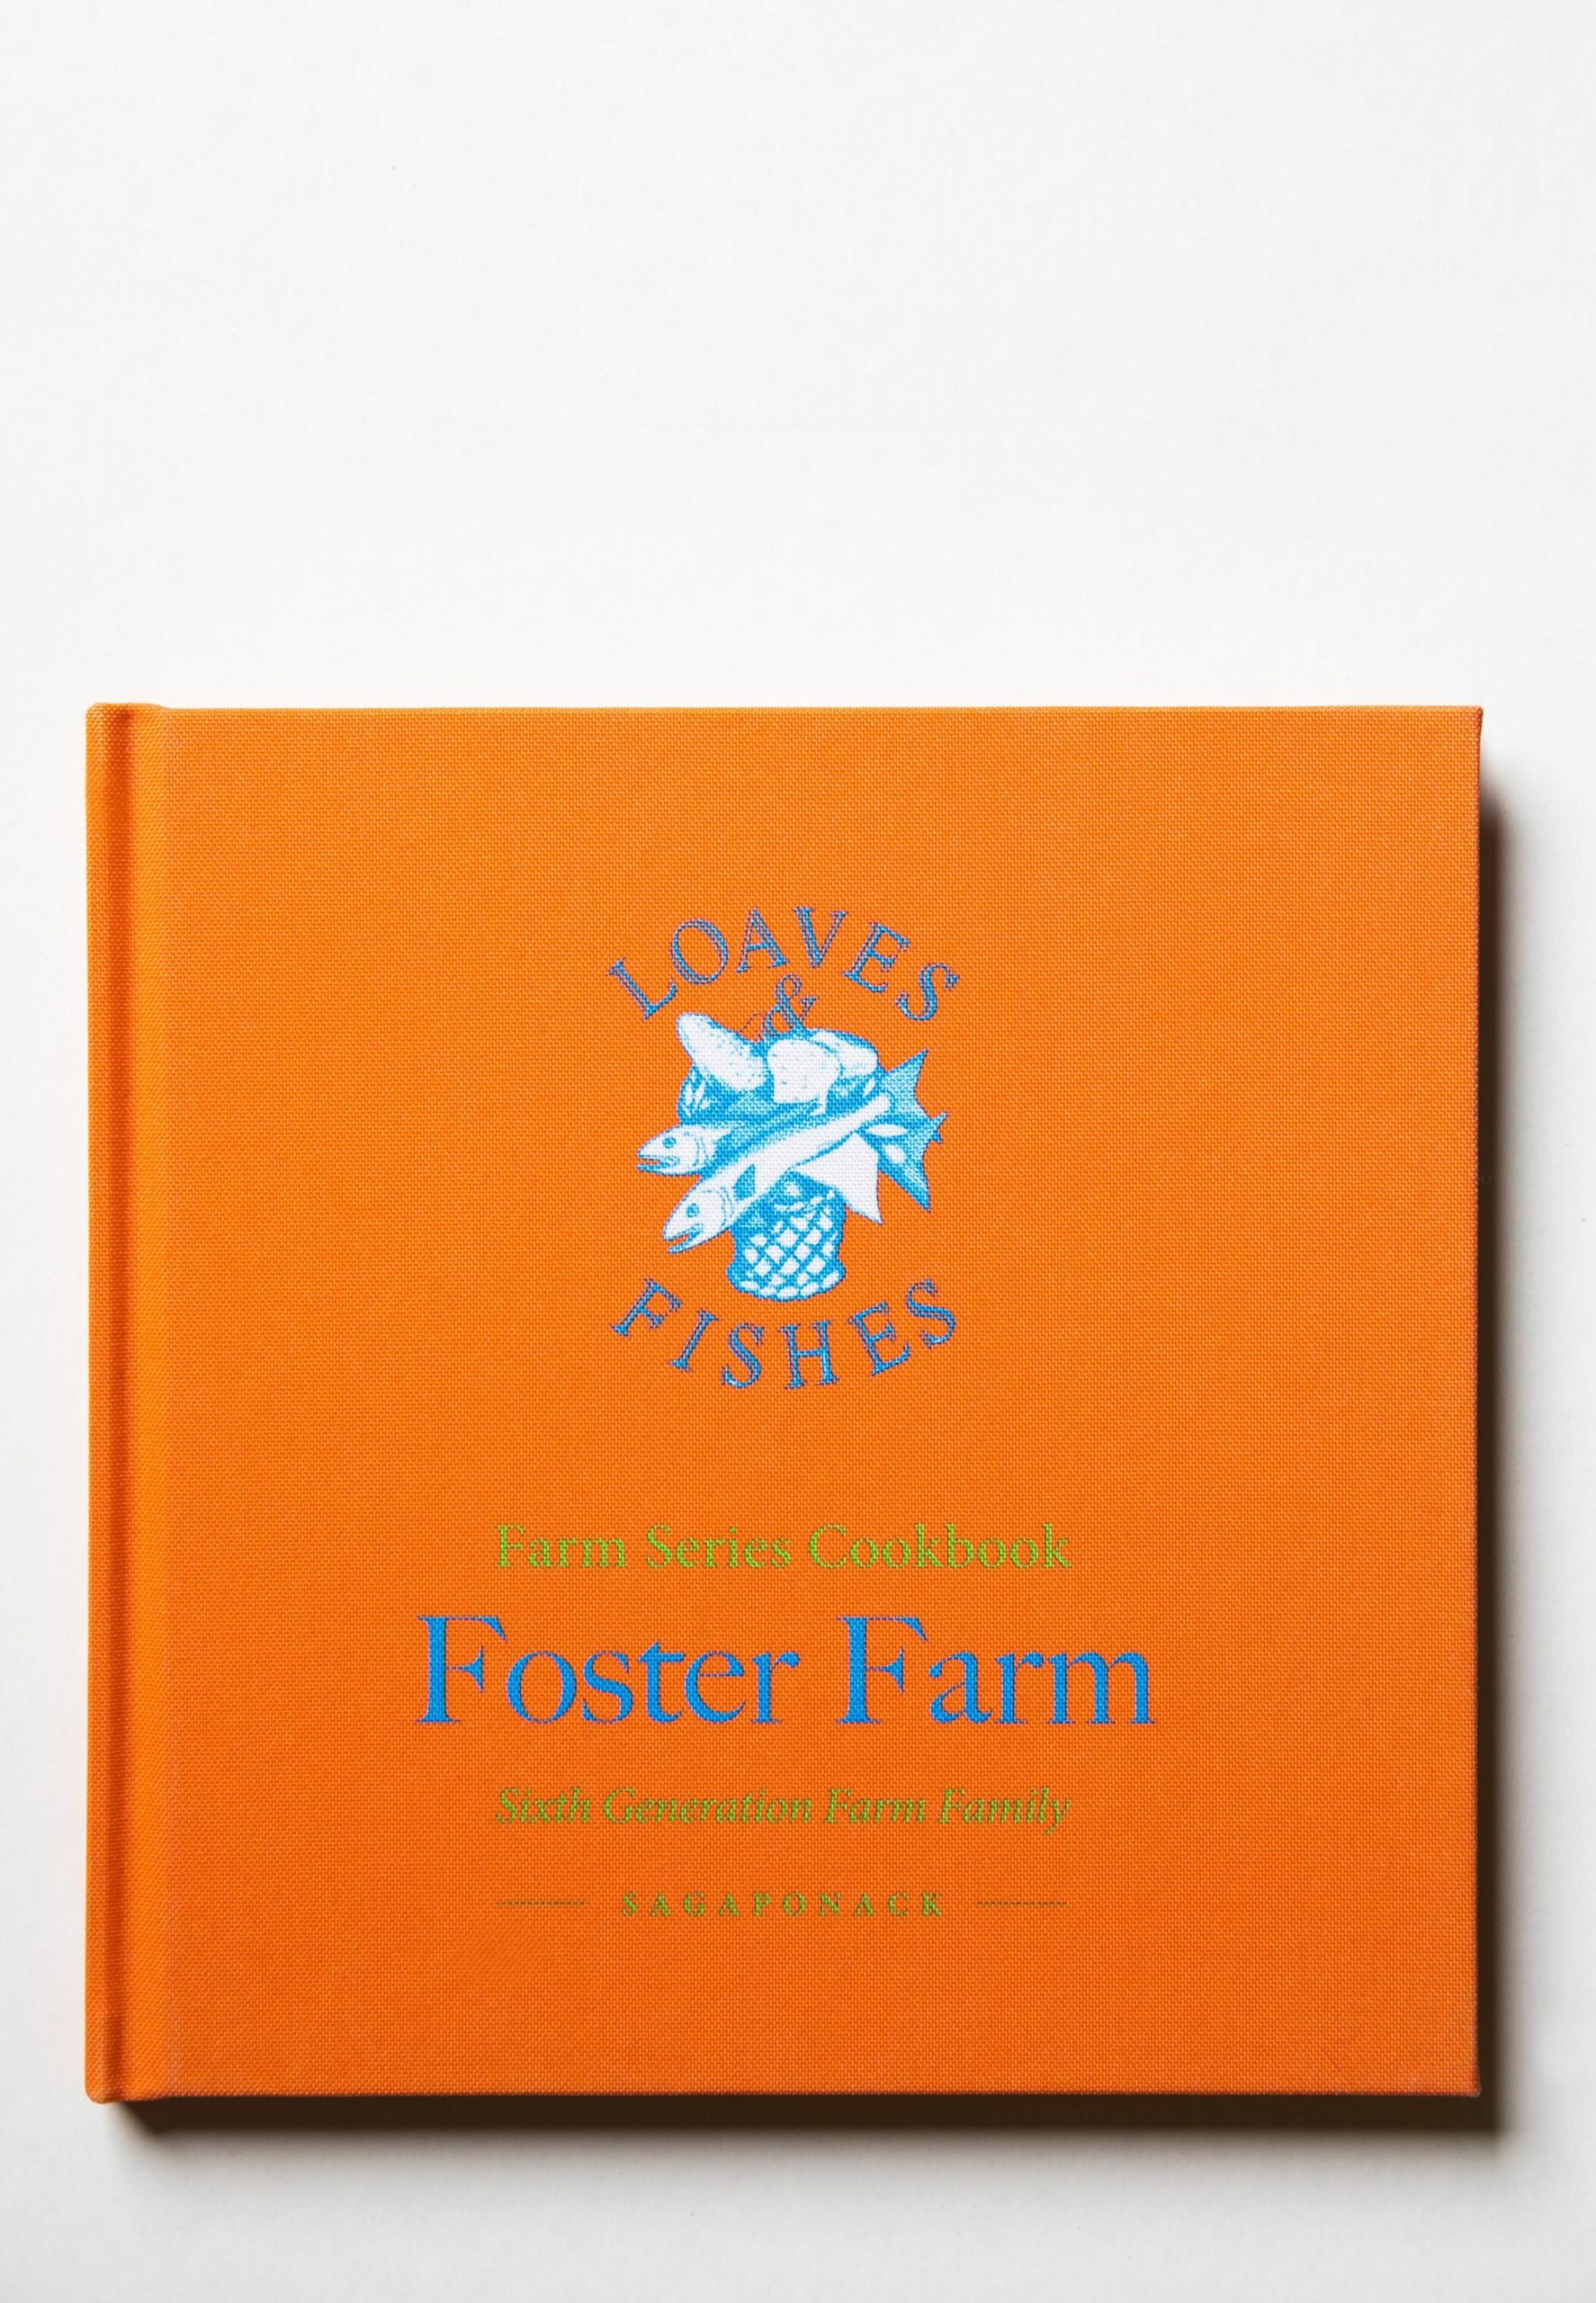 The Foster Farm Cookbook.